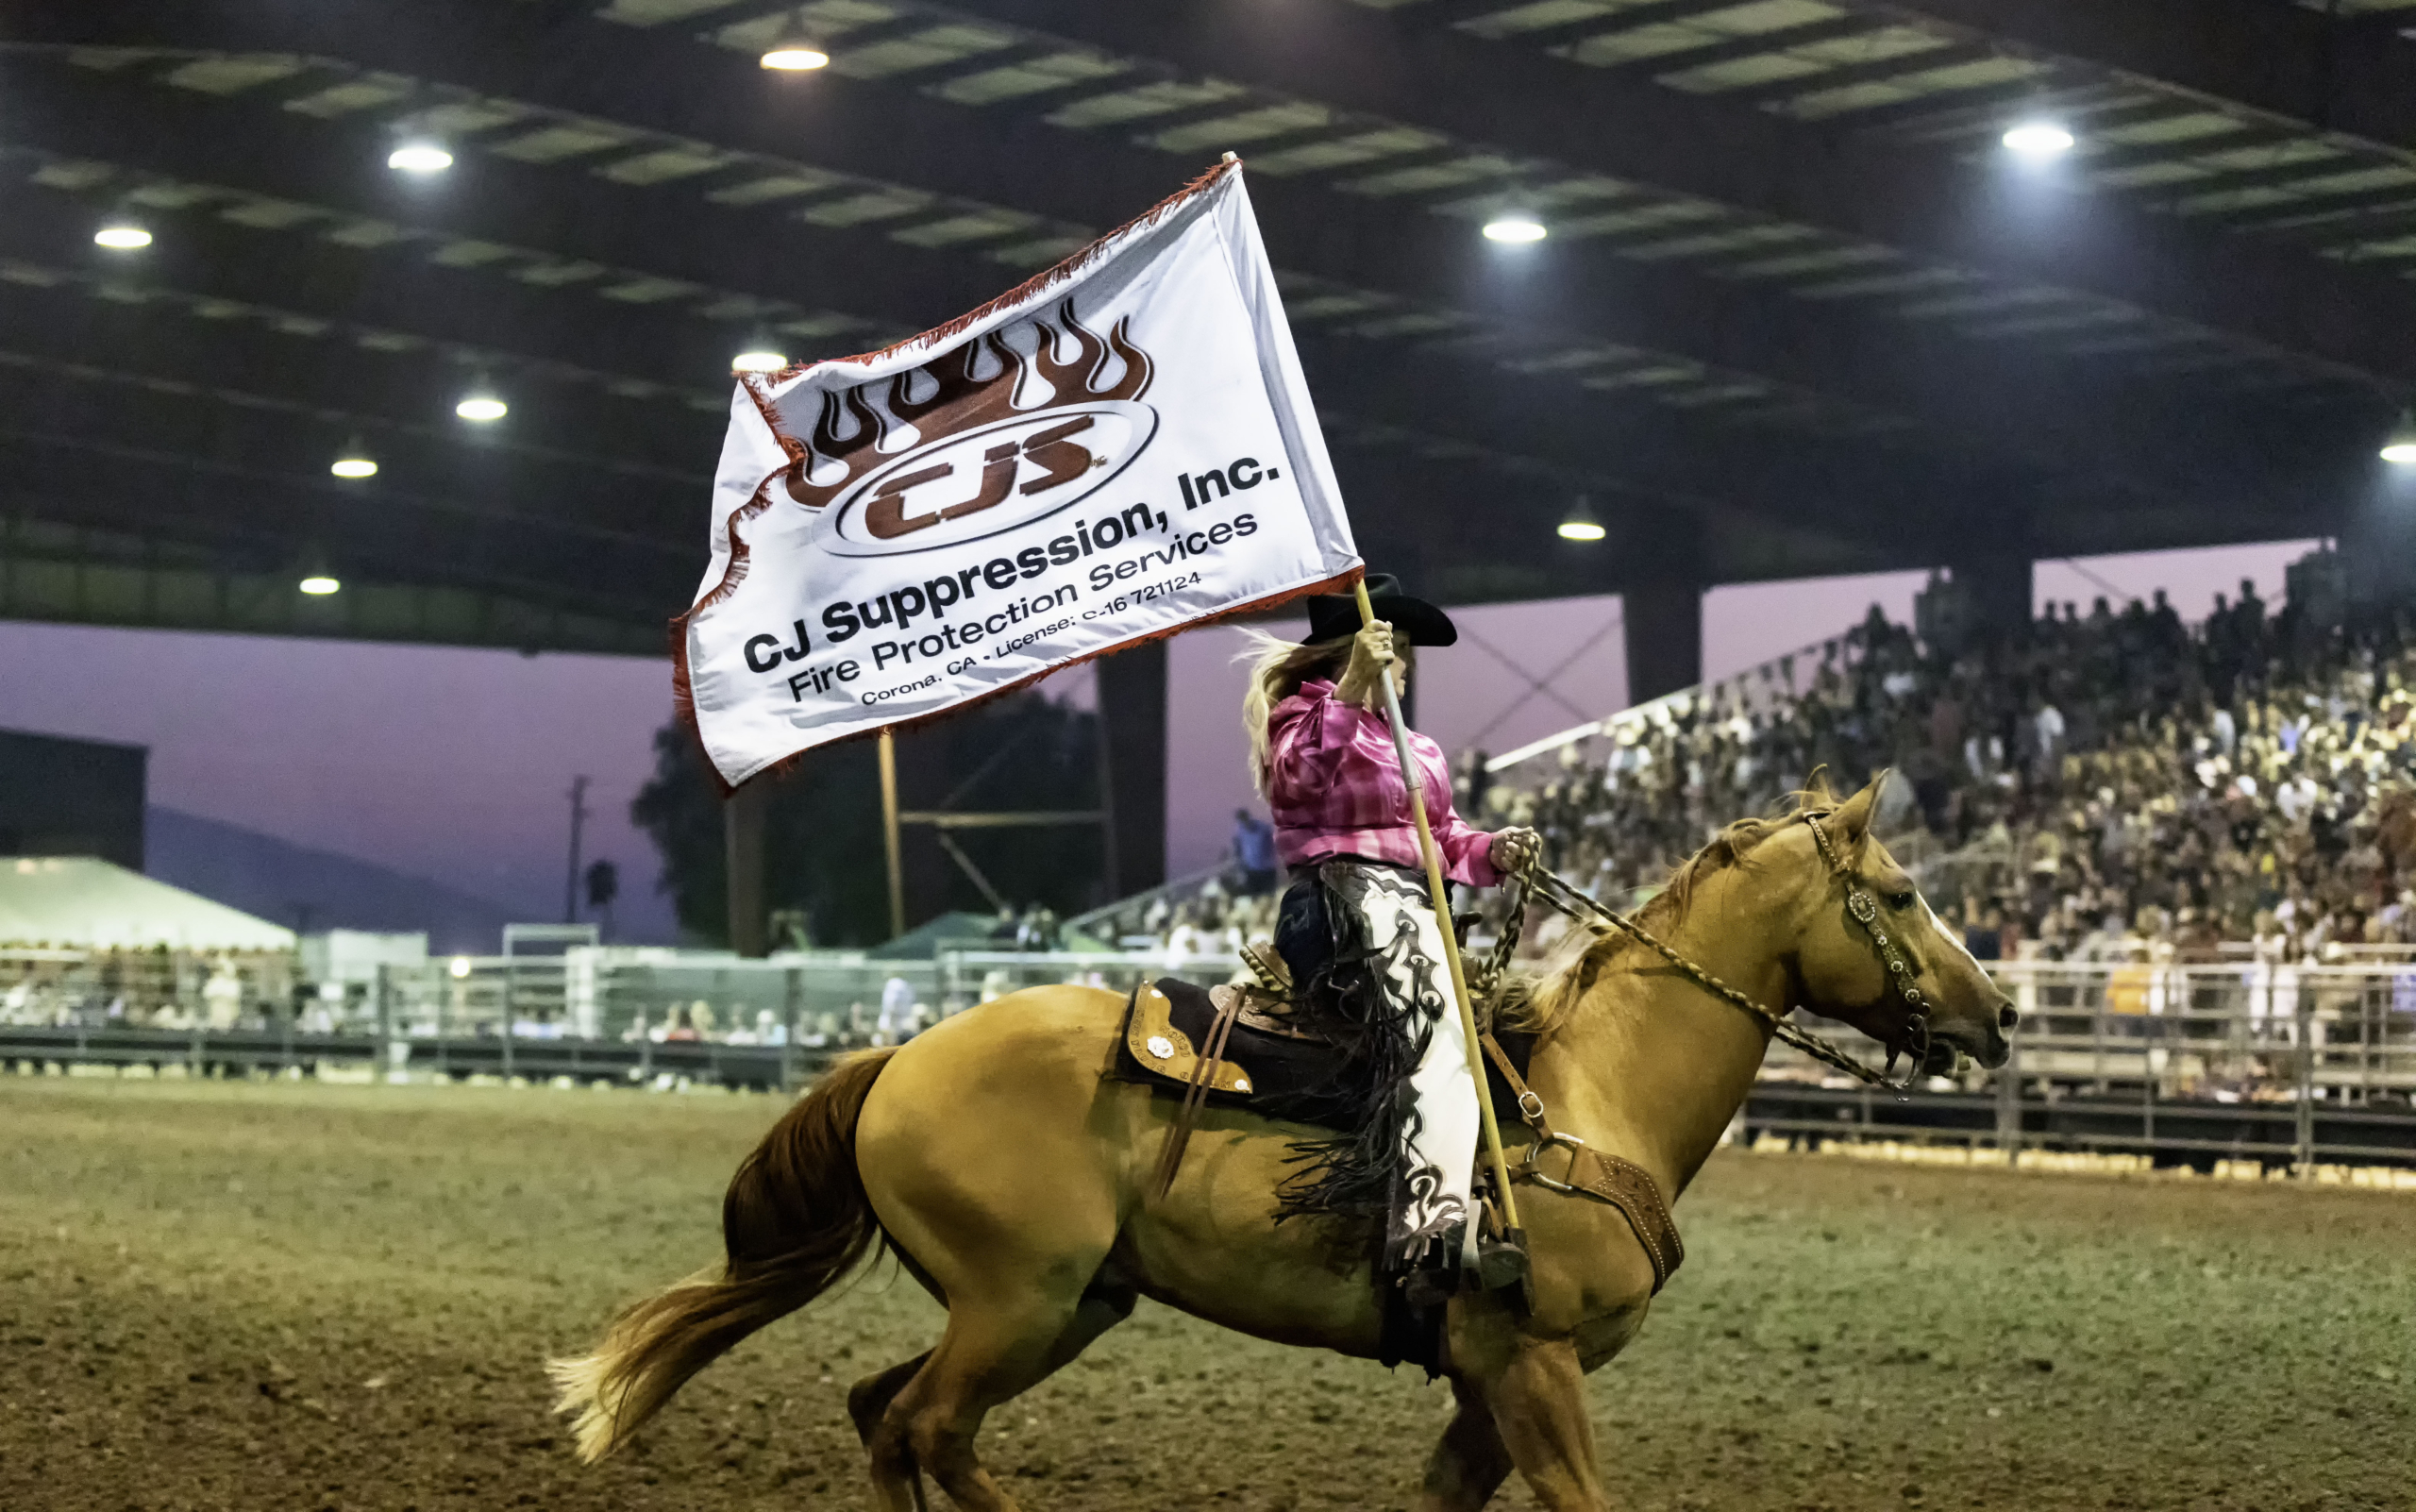 a person riding a horse holding a flag